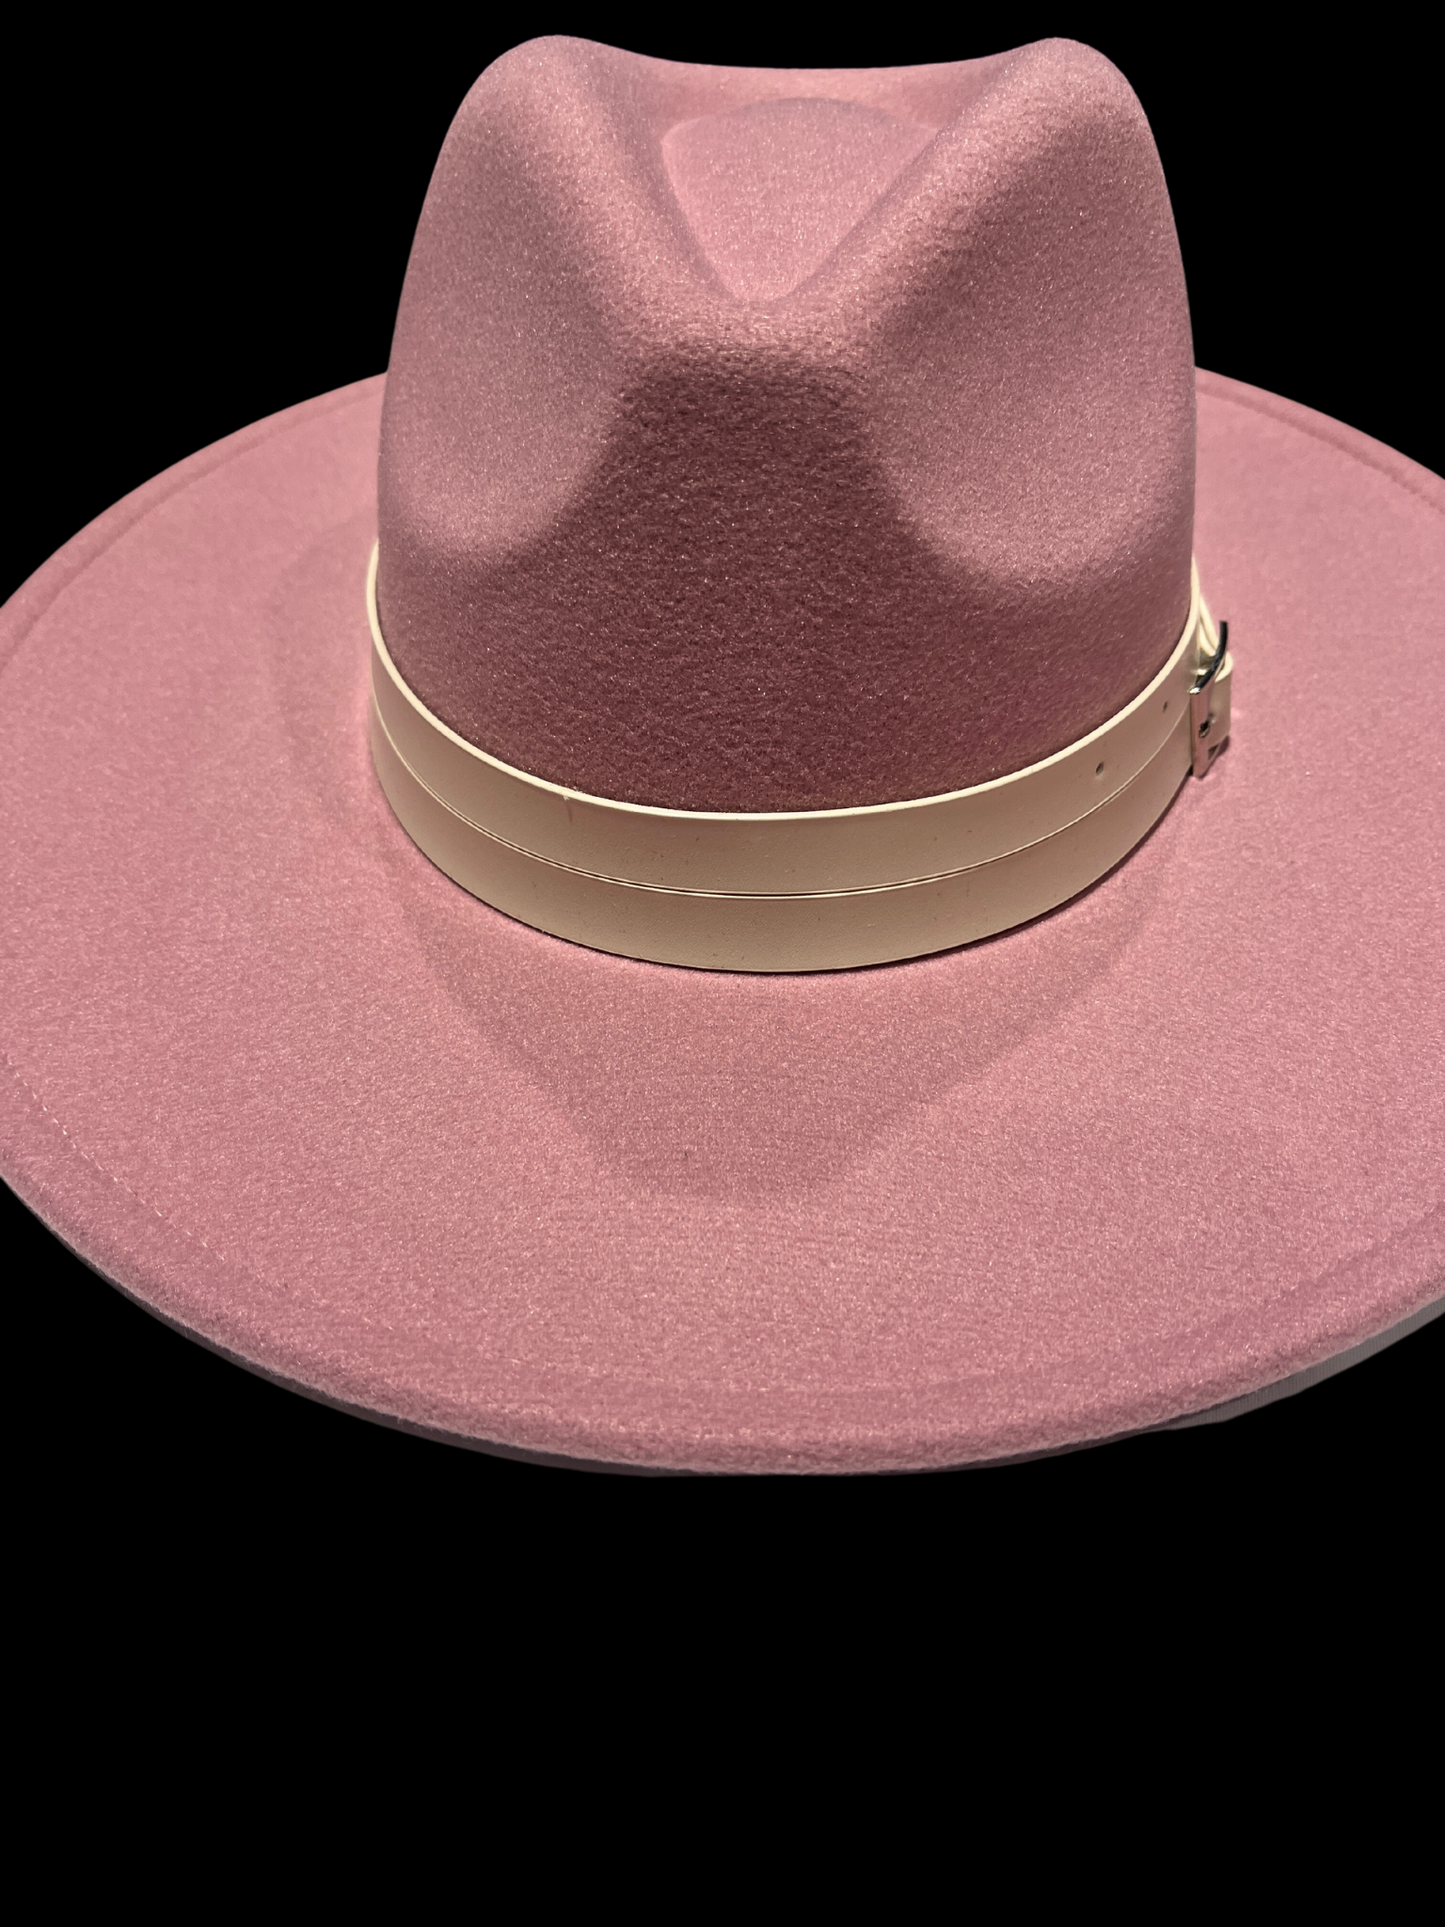 Blush Wool Hat with cream leather trim